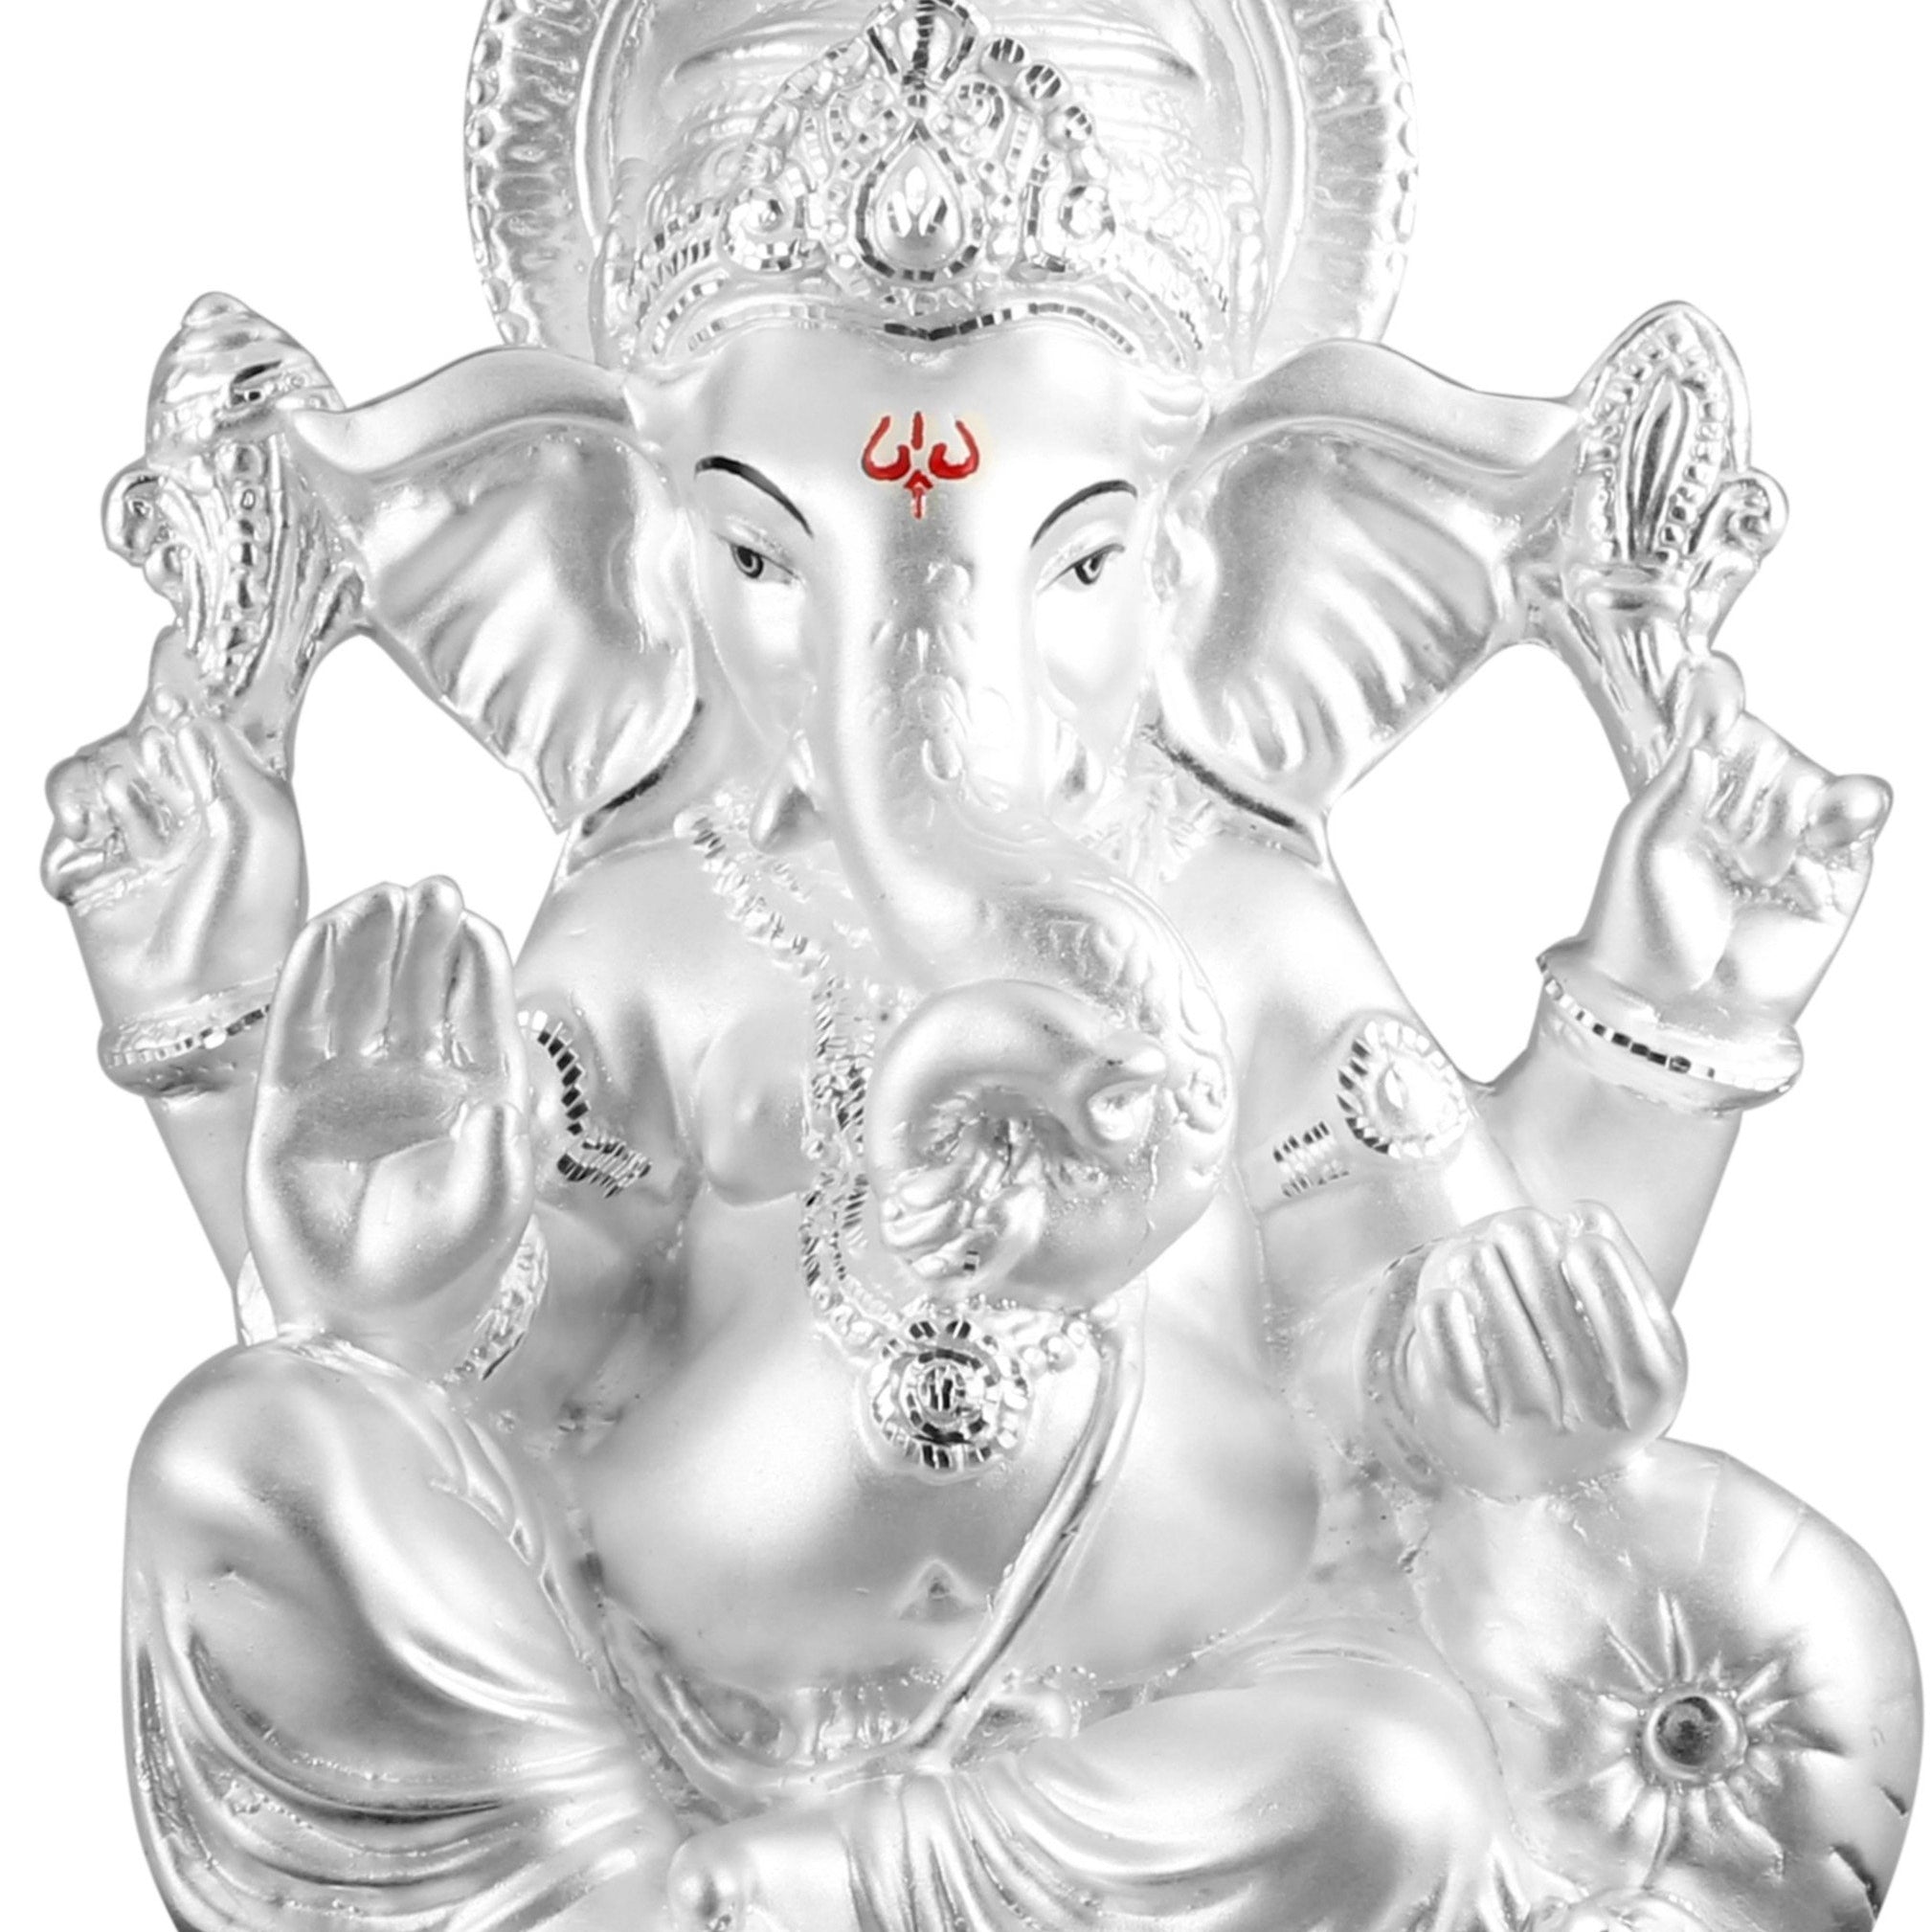 999 Pure Silver Ganesha Idol By Krysaliis Isvara - Krign46 Idols